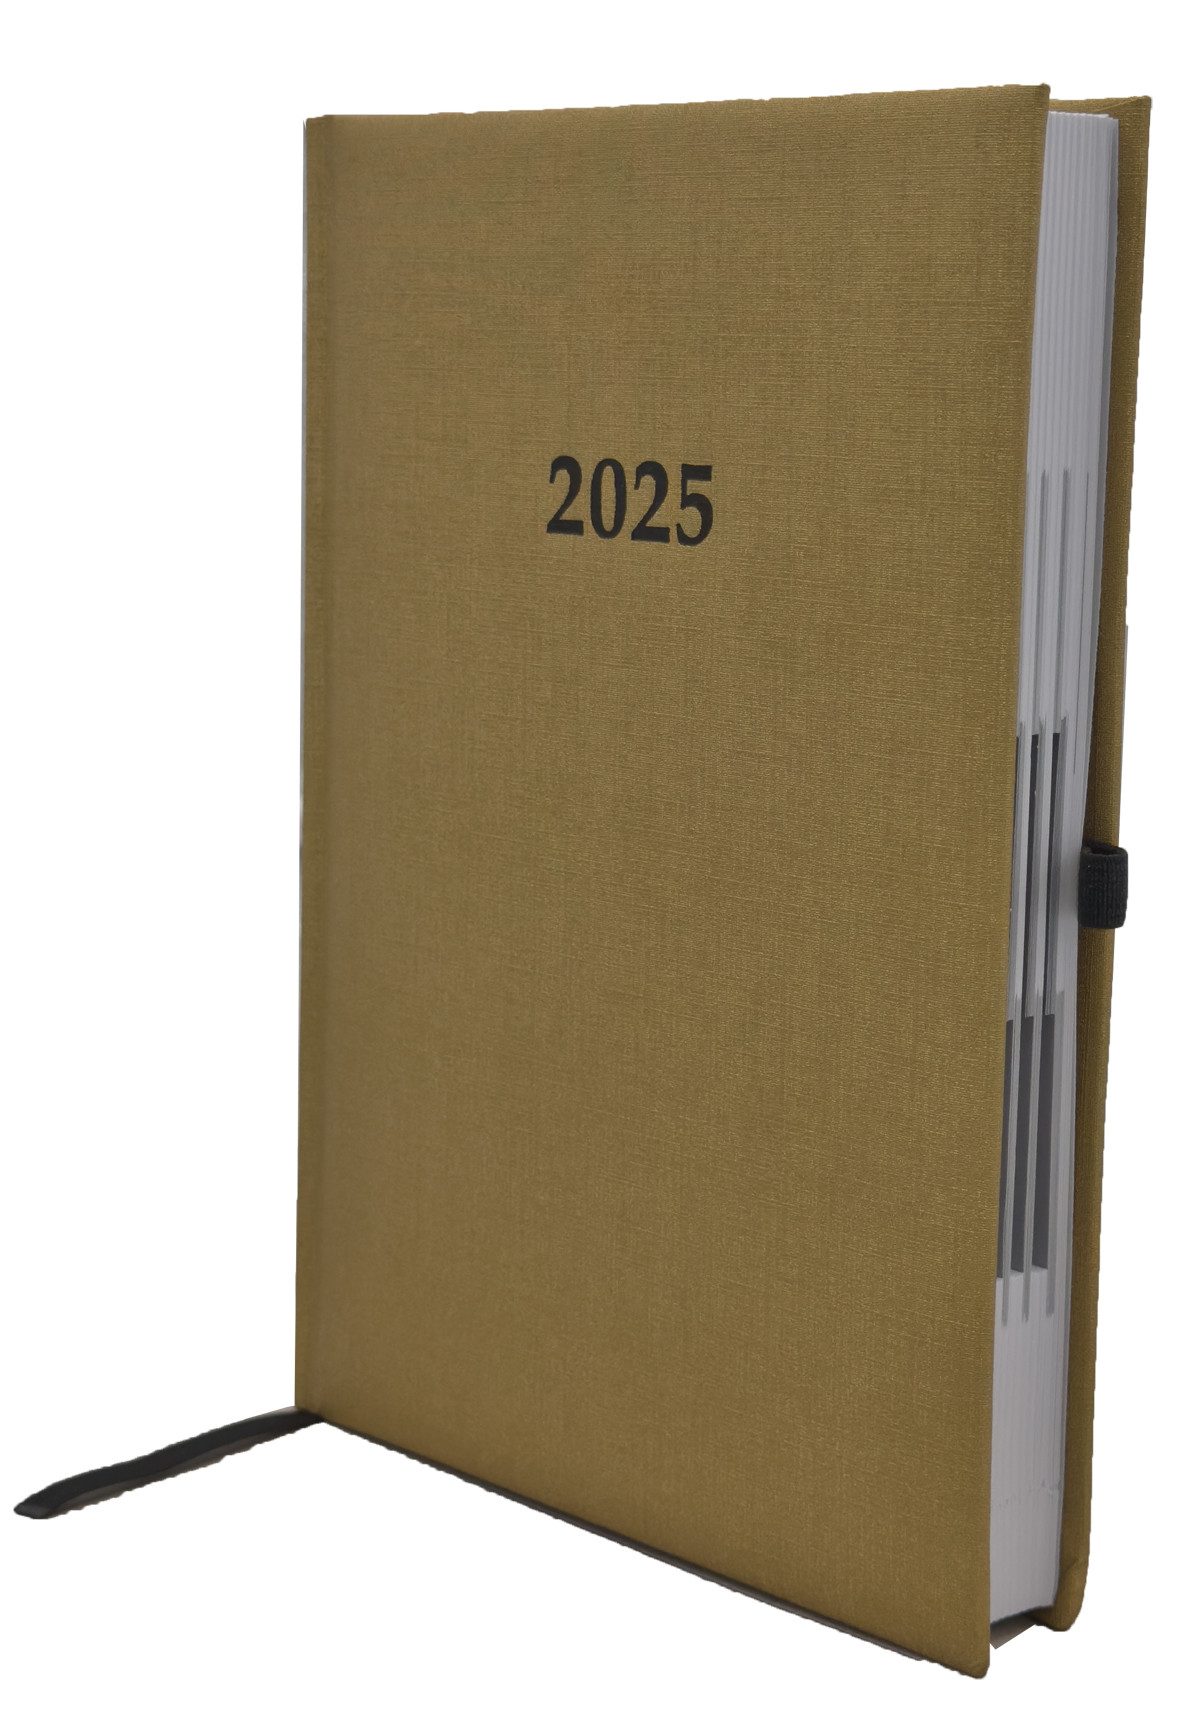 ADINA Schultüte 2025 ADINA Buchkalender Chefplaner A5 gold-metallic 1 Tag 1 Seite